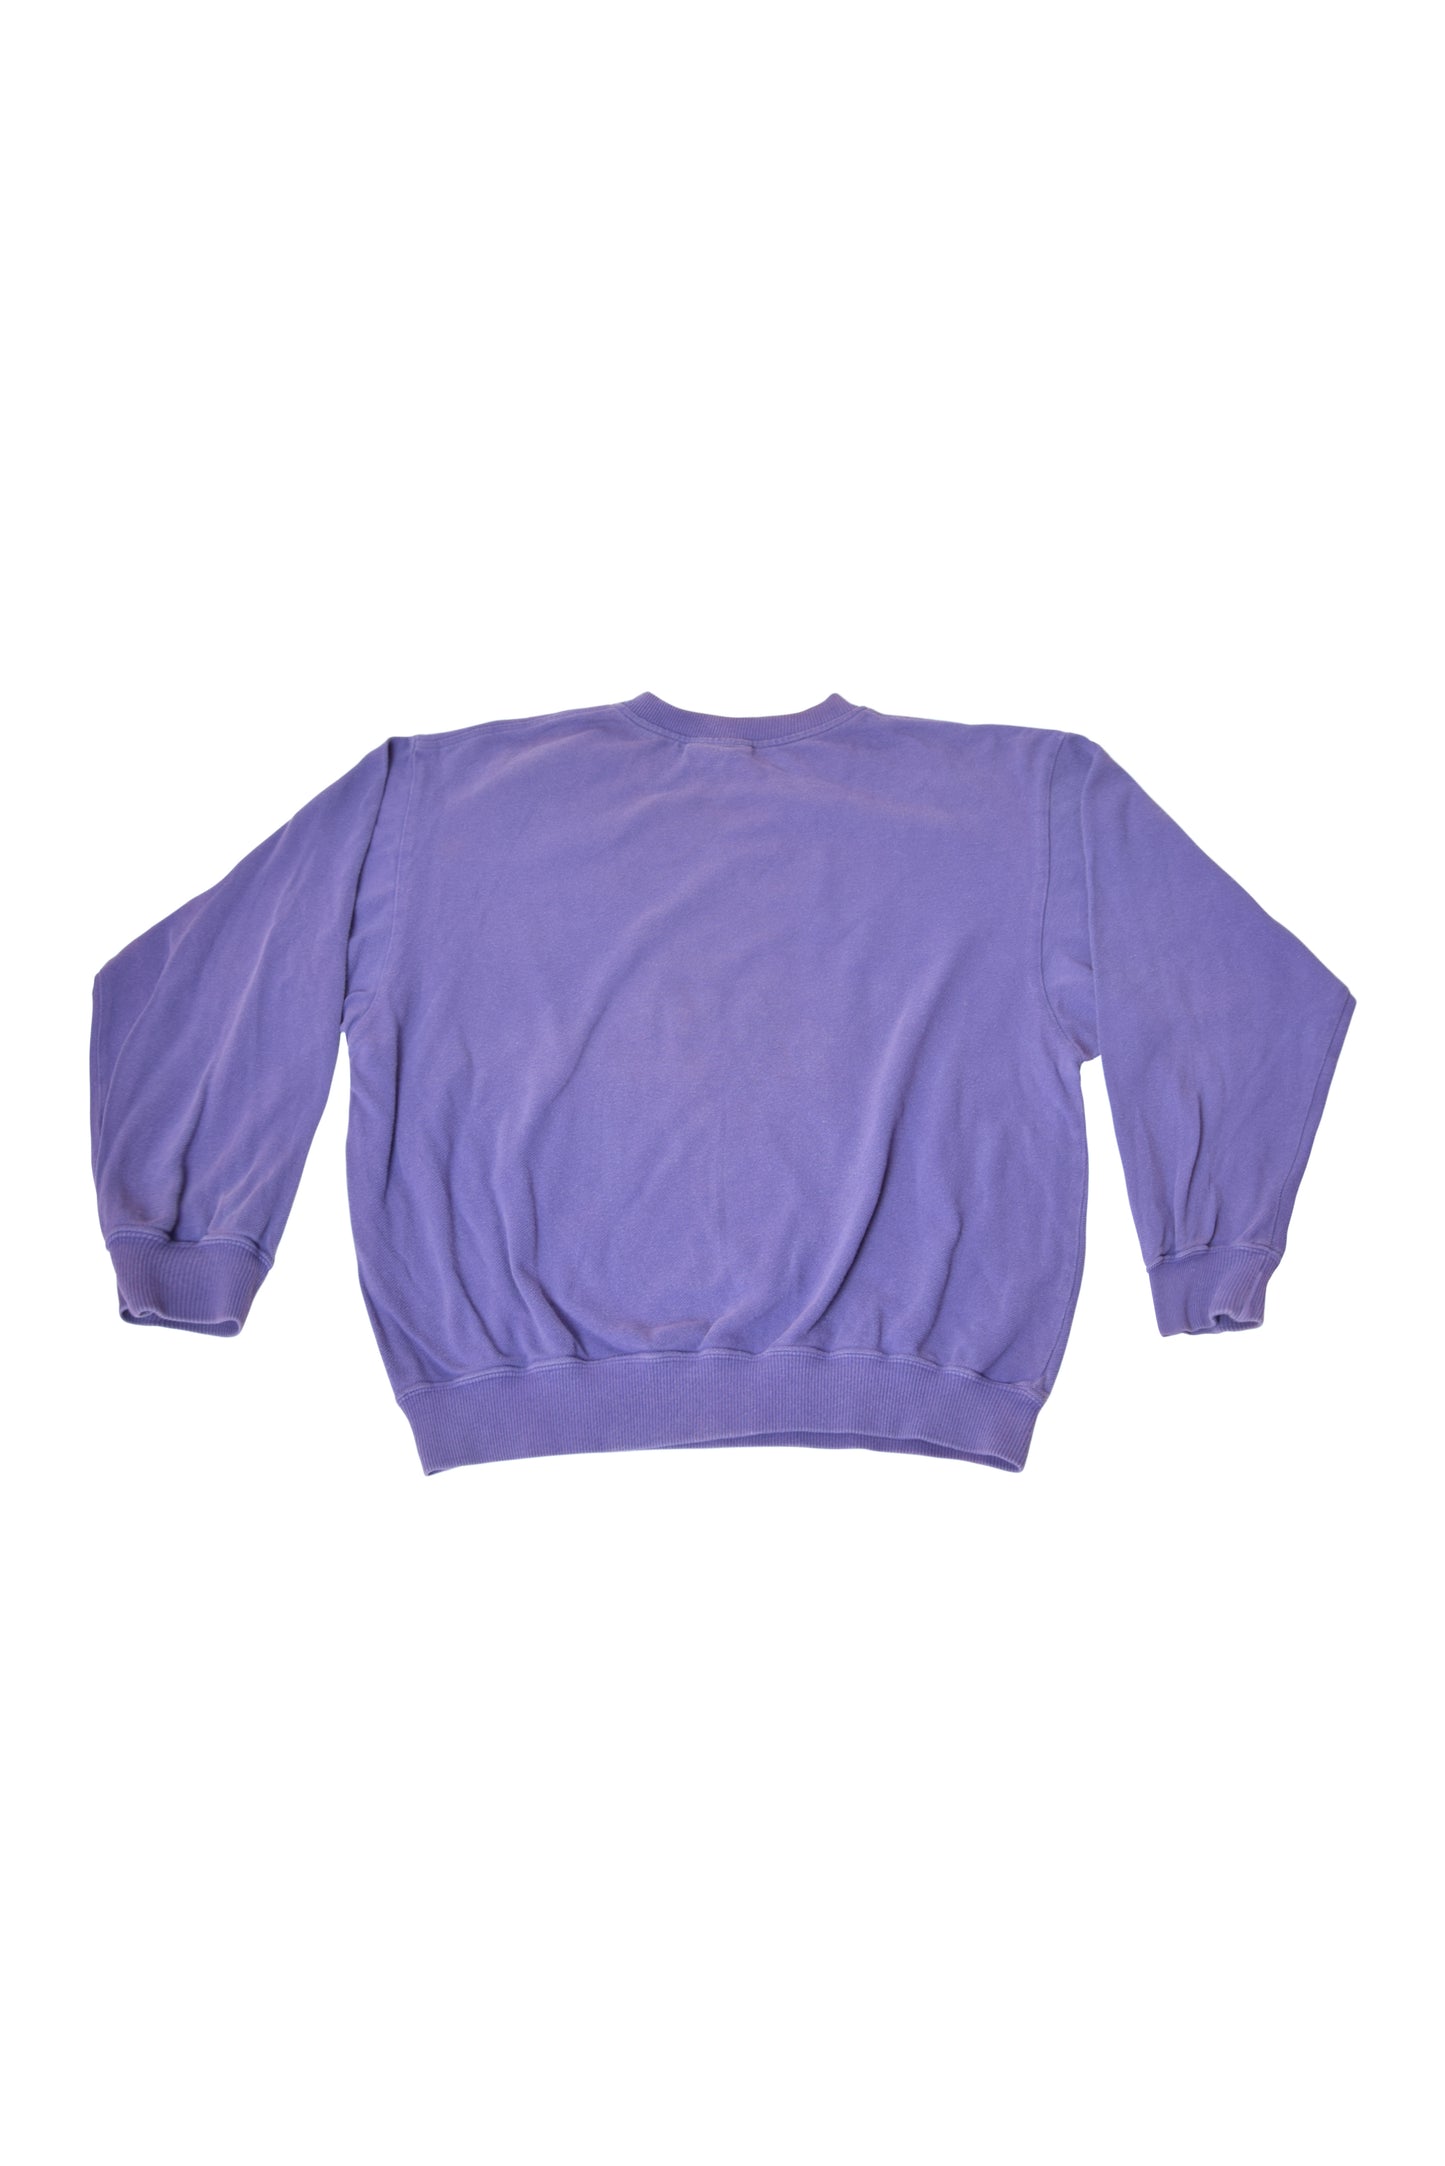 Vintage Lacoste Sweatshirt 80's Made in France Golf Purple 